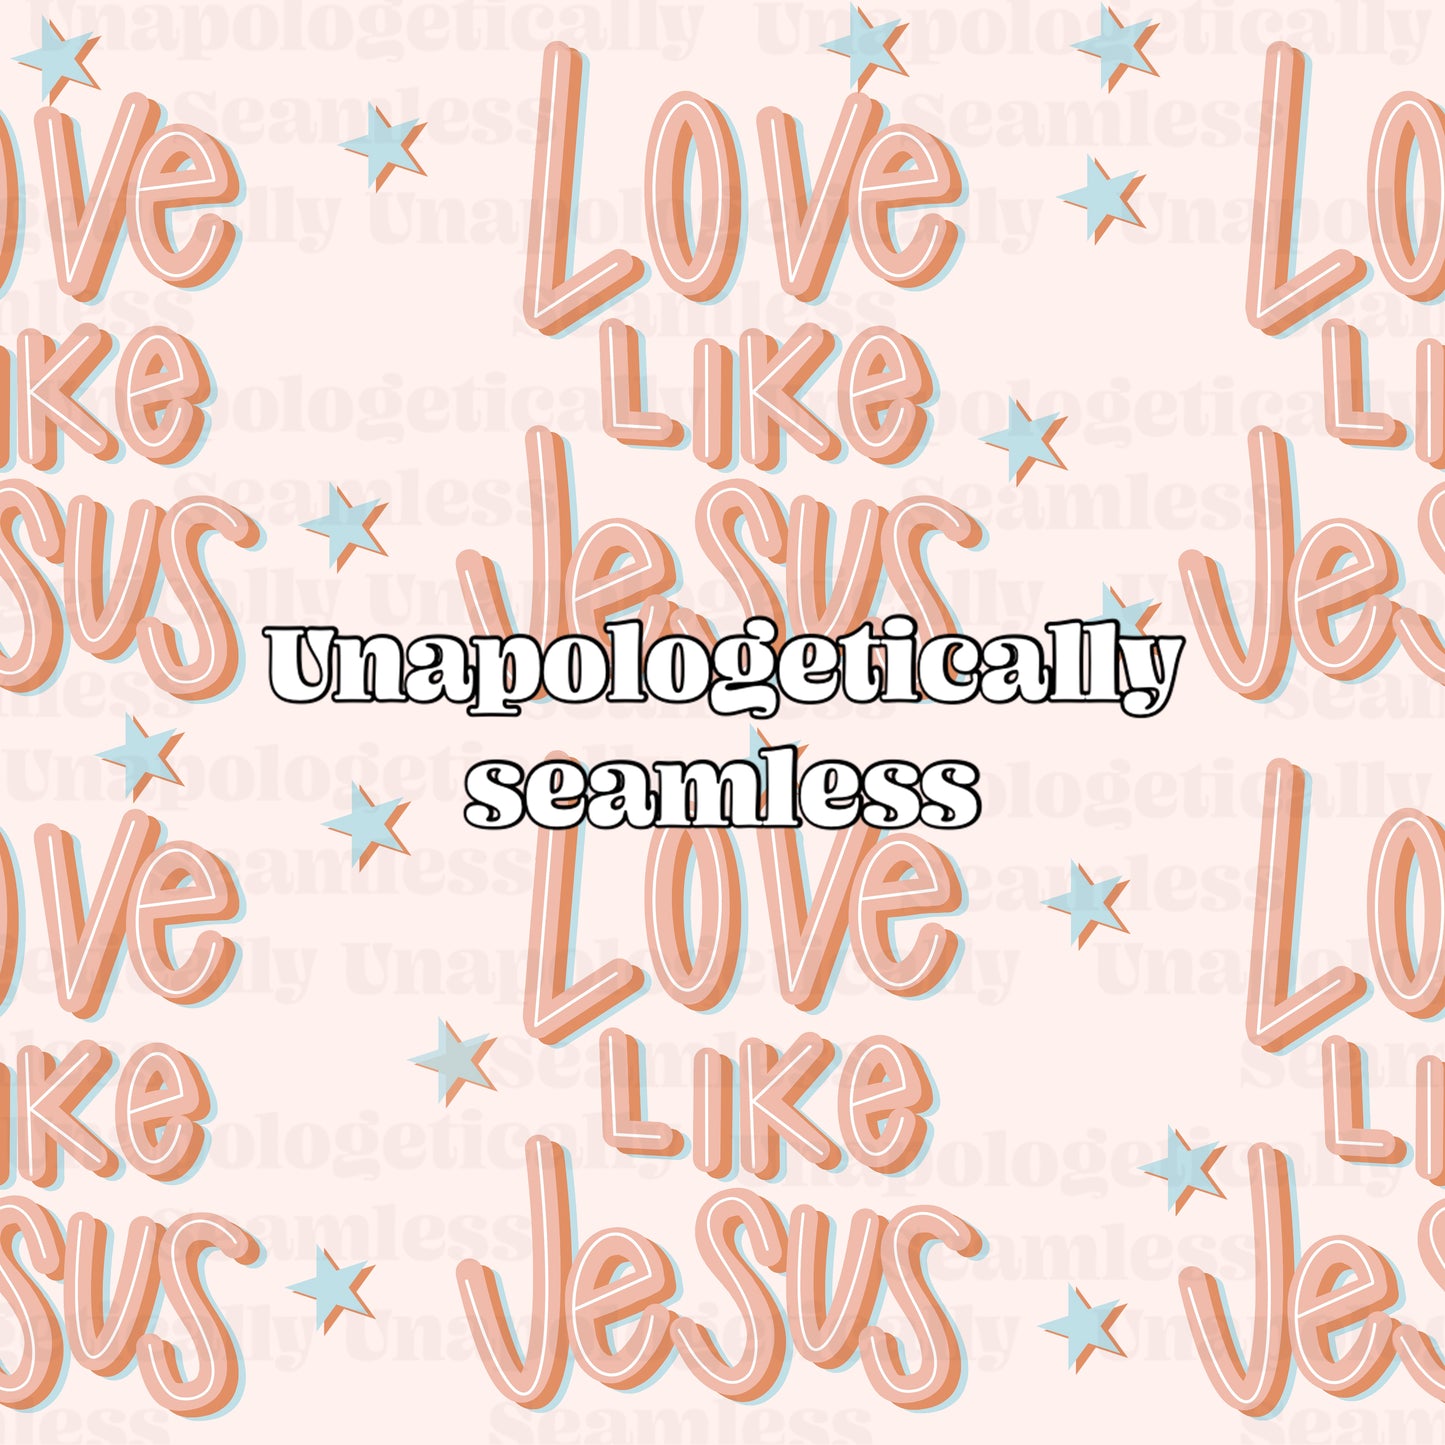 Love Like Jesus #2